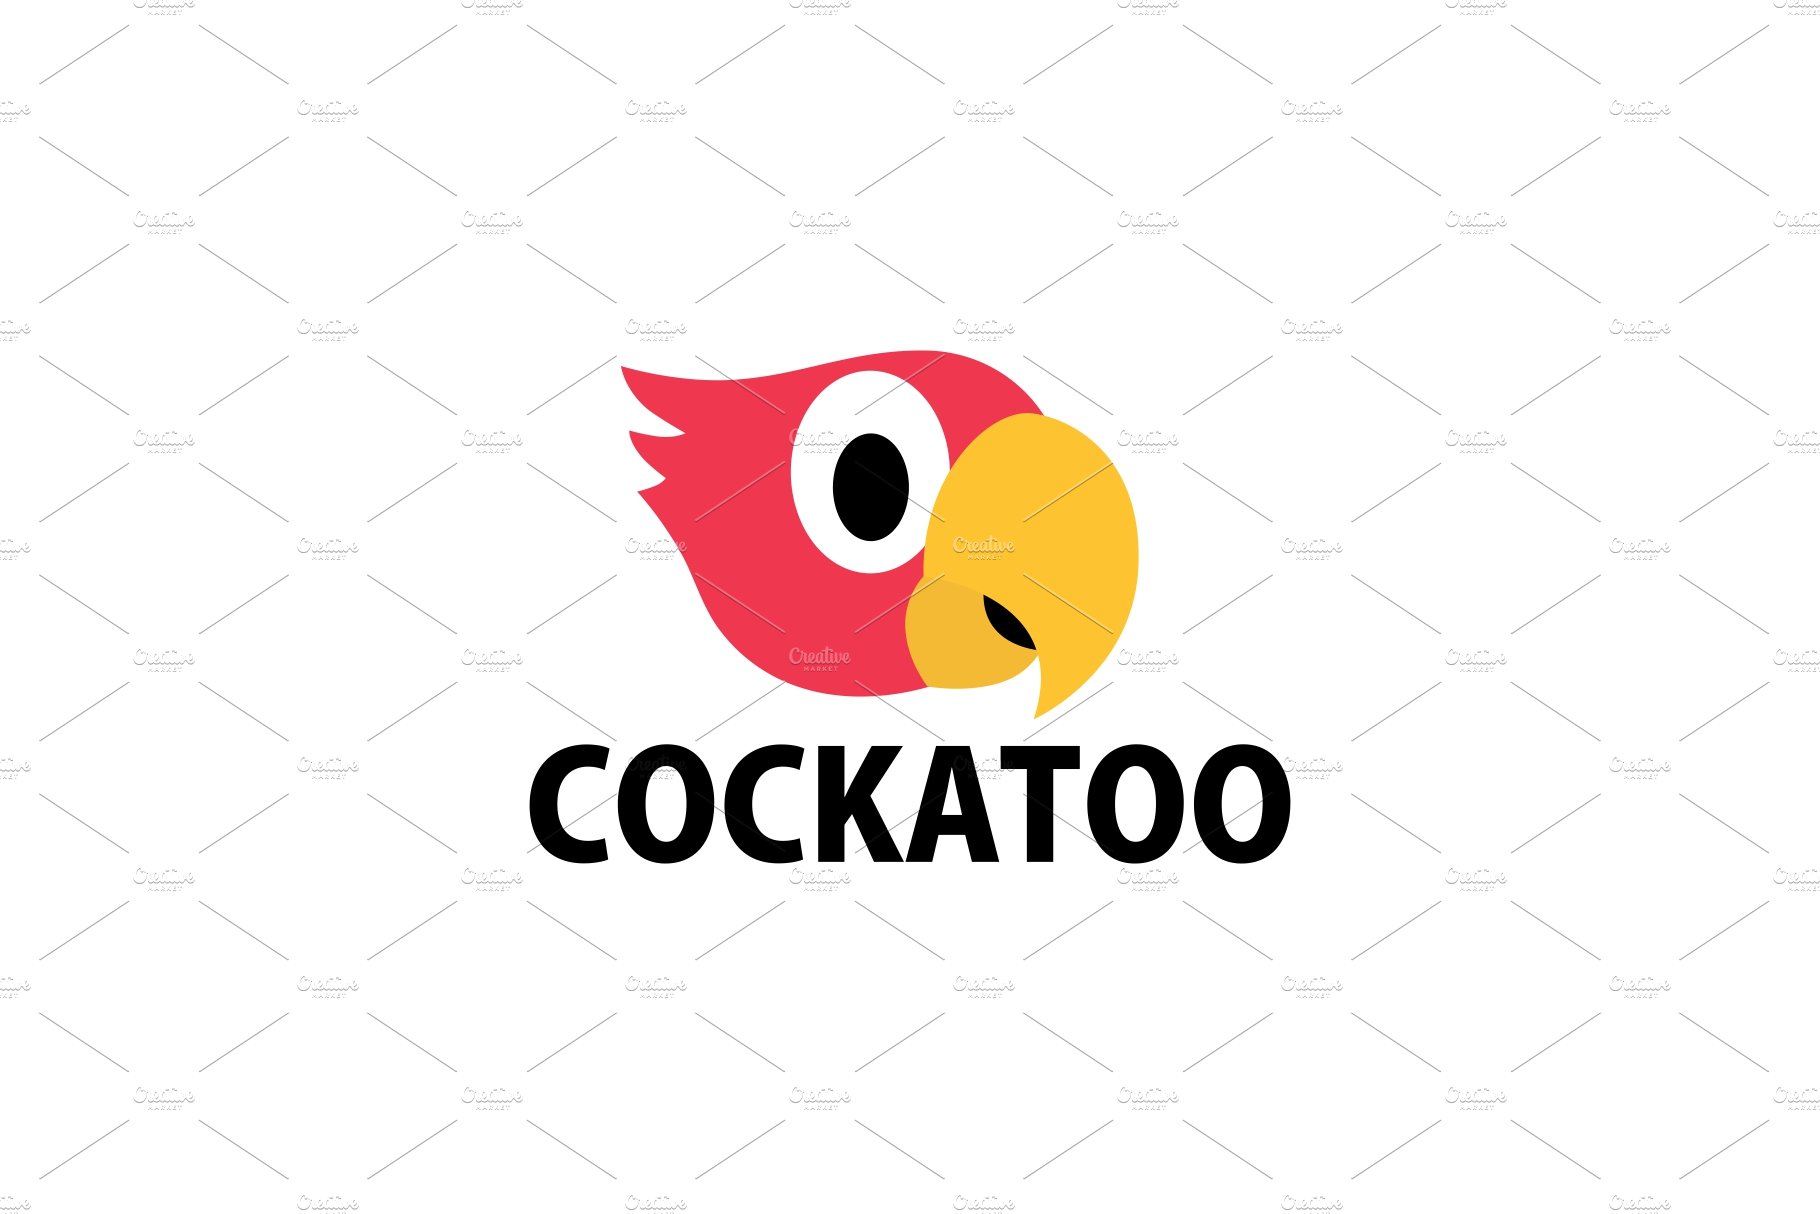 cute cockatoo flat logo vector icon cover image.